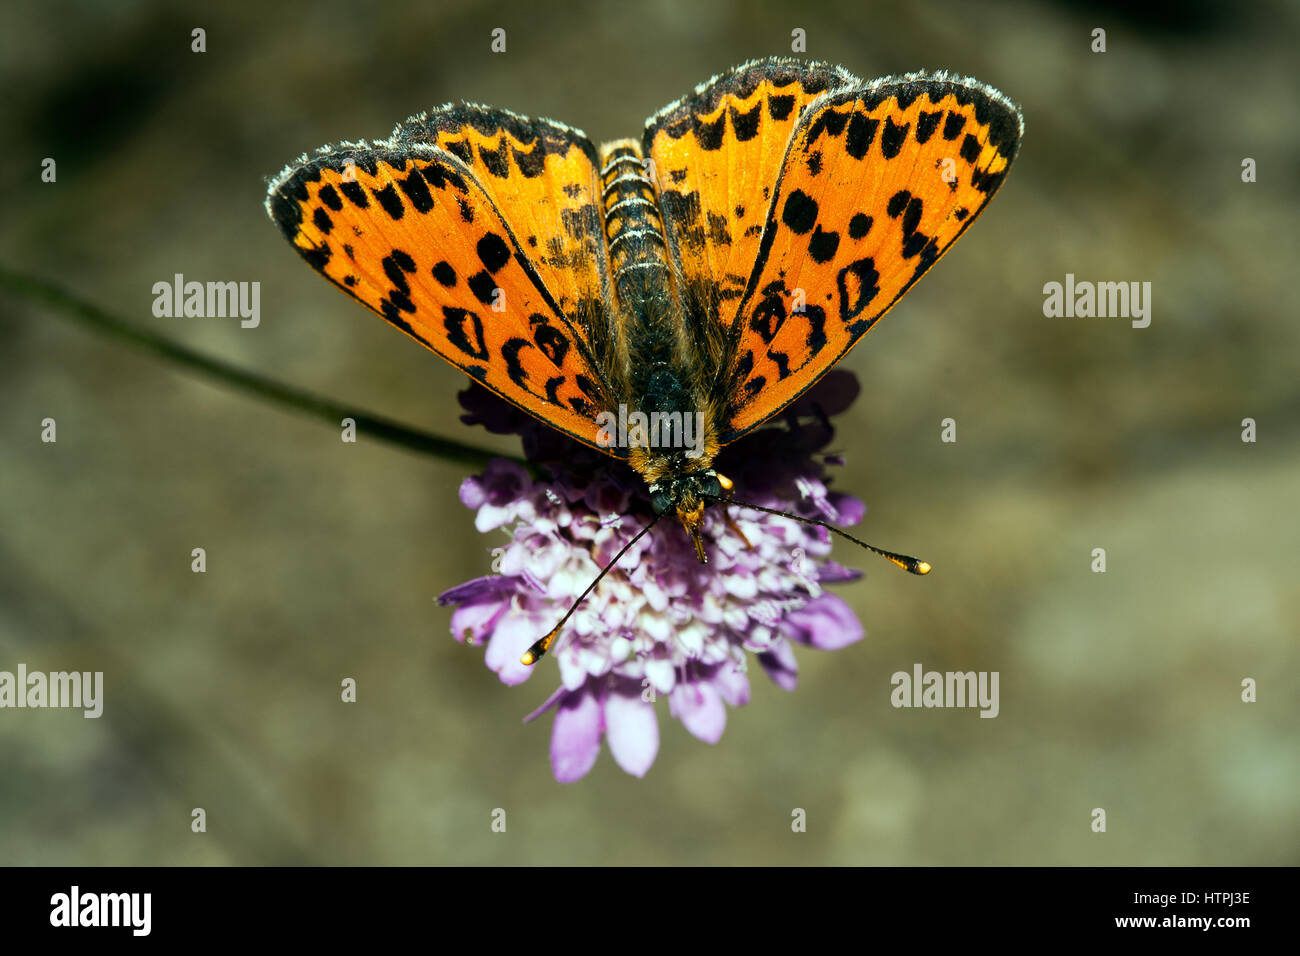 Kingdom:Animalia Phylum: Arthropoda Class: Insecta Order: Lepidoptera Family: Nymphalidae Genus: Melitaea Species: M. didyma Stock Photo